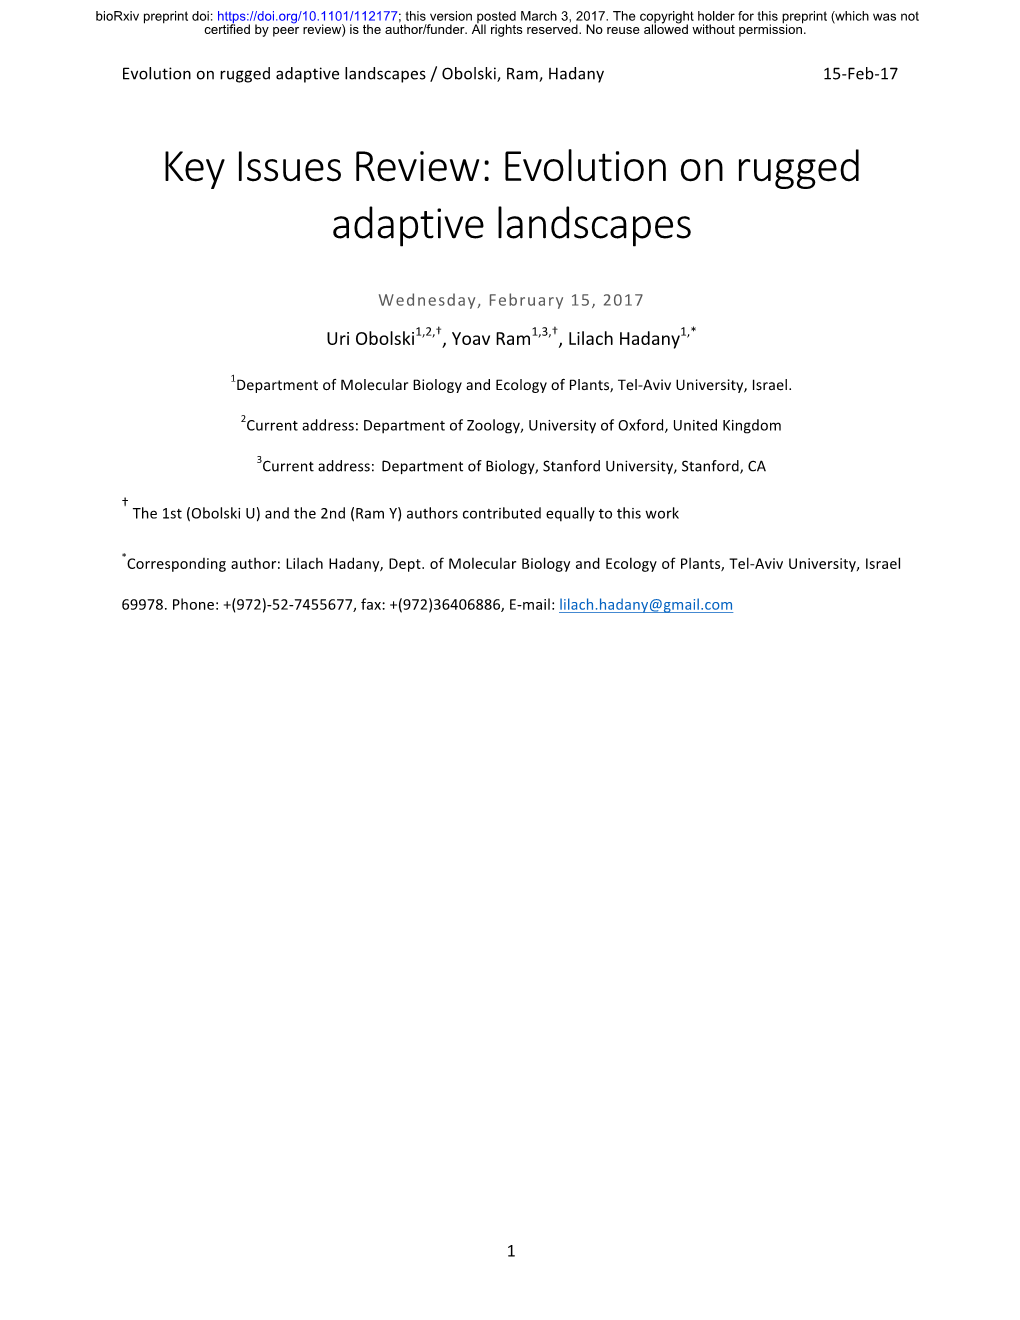 Evolution on Rugged Adaptive Landscapes / Obolski, Ram, Hadany 15-Feb-17